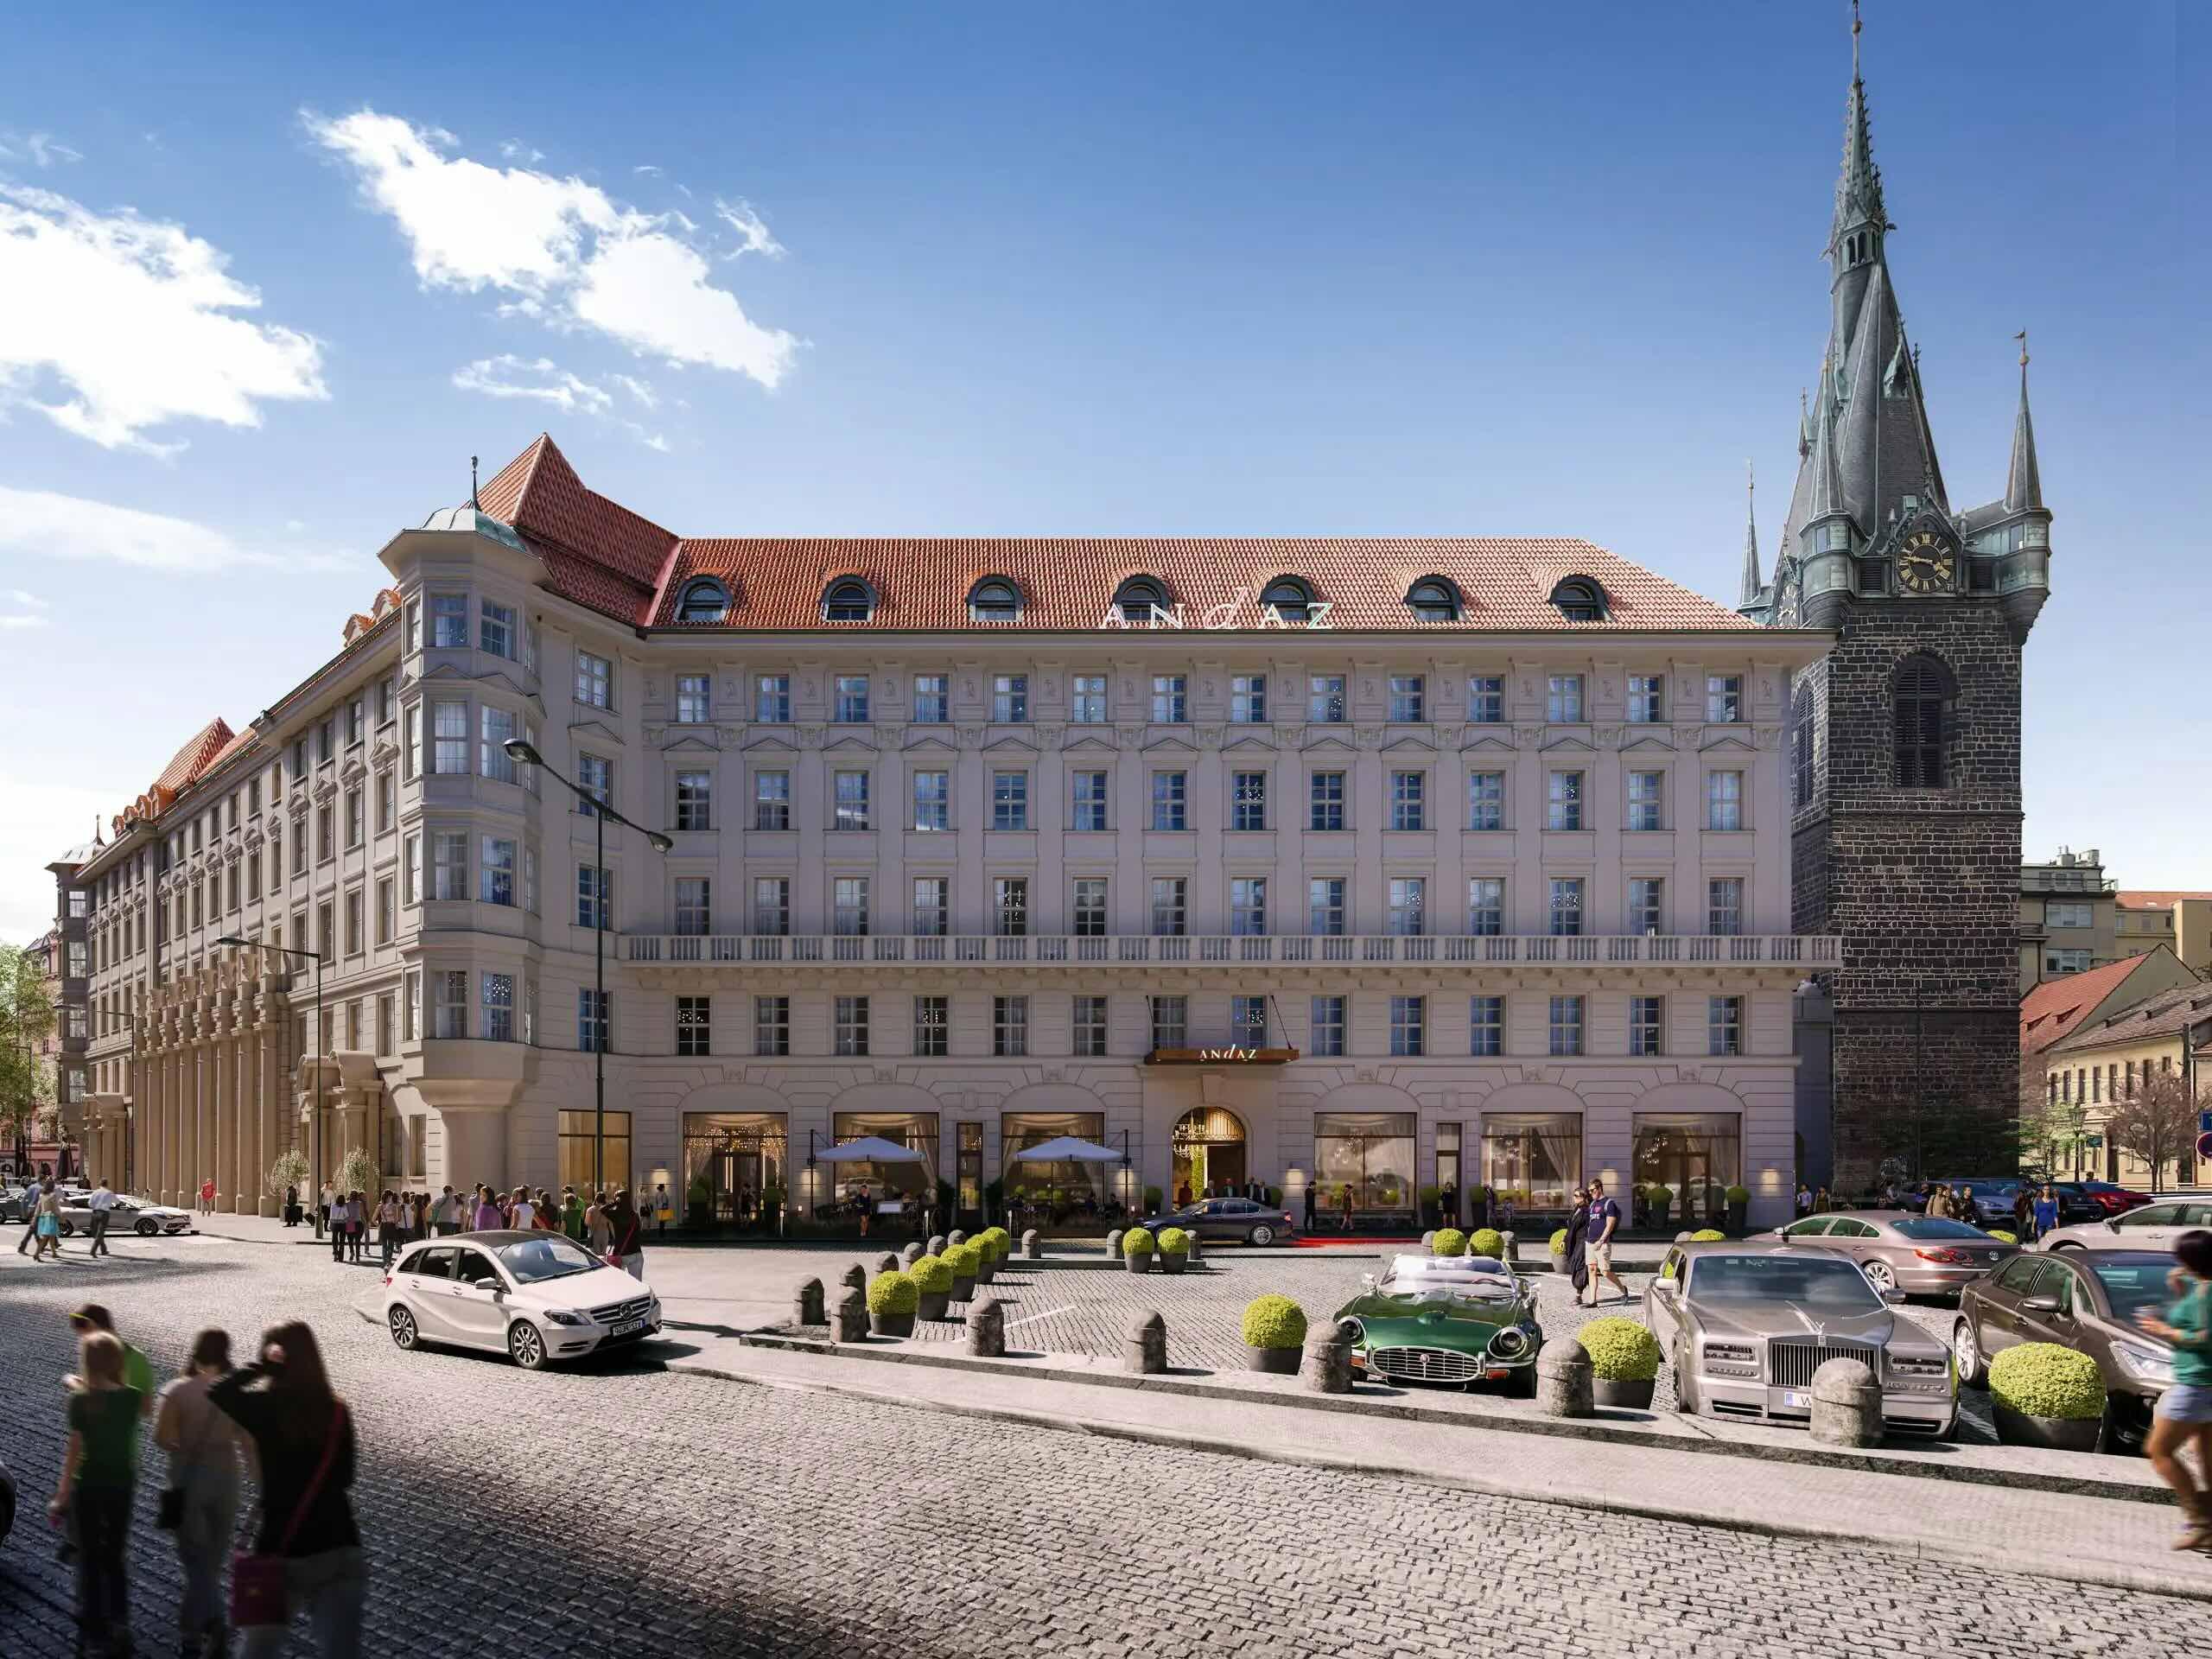 Globetotter: Andaz Prague is a stylish spot to celebrate the city-image